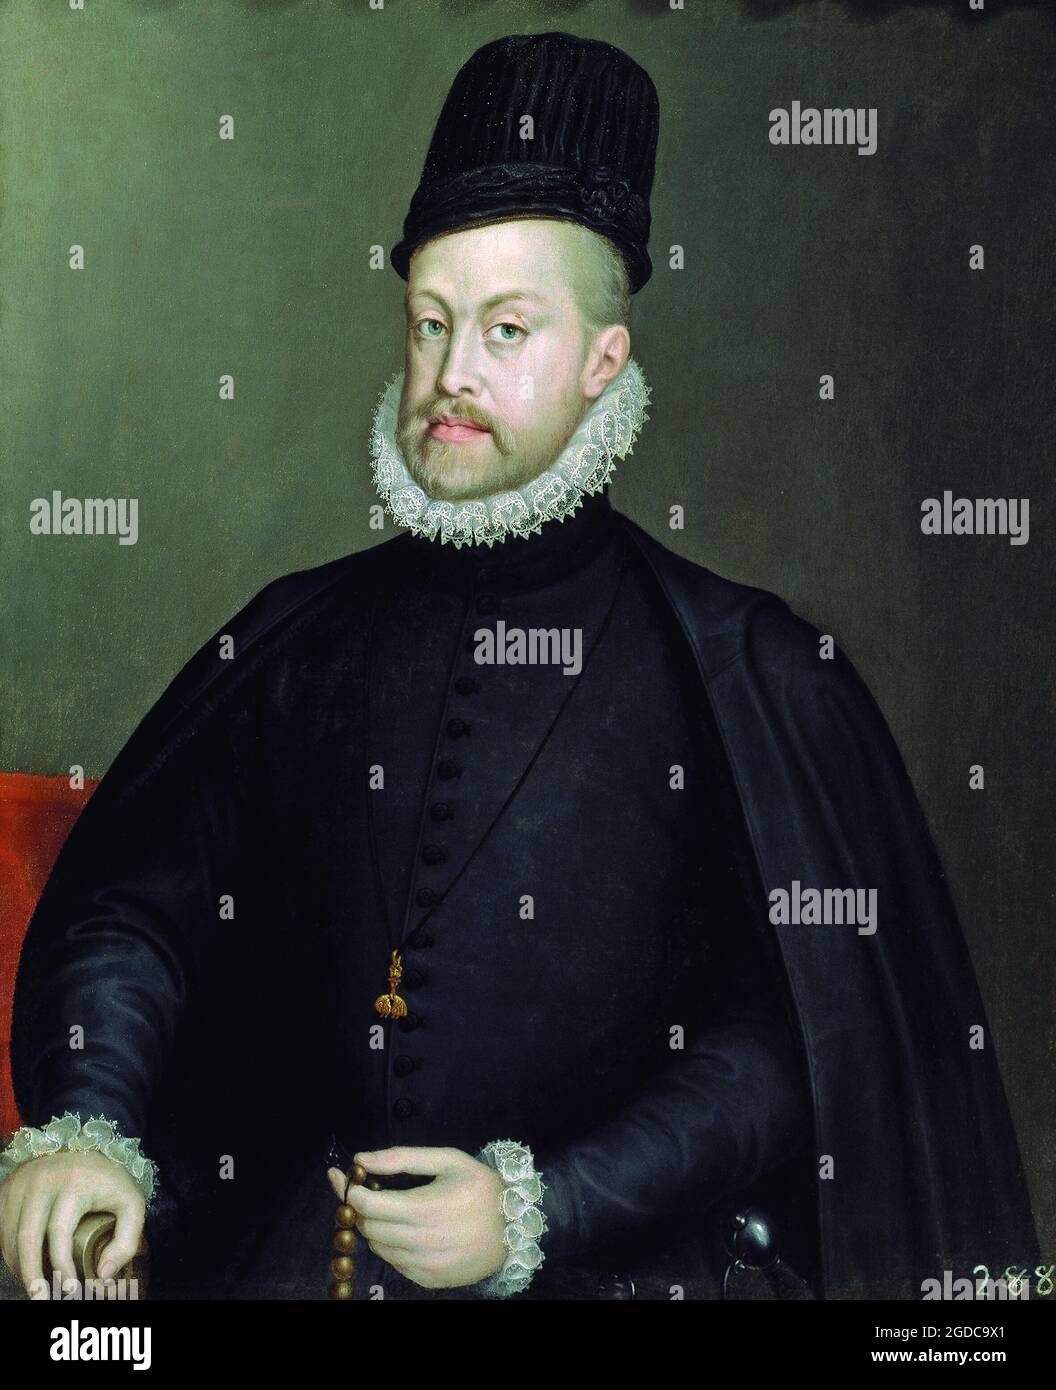 Title: Felipe II - Philip II Creator: Sofonisba Anguissola Date: 1565 Medium: Oil on canvas Dimension: 88 x 72 cm Location: Museo Nacional del Prado Stock Photo